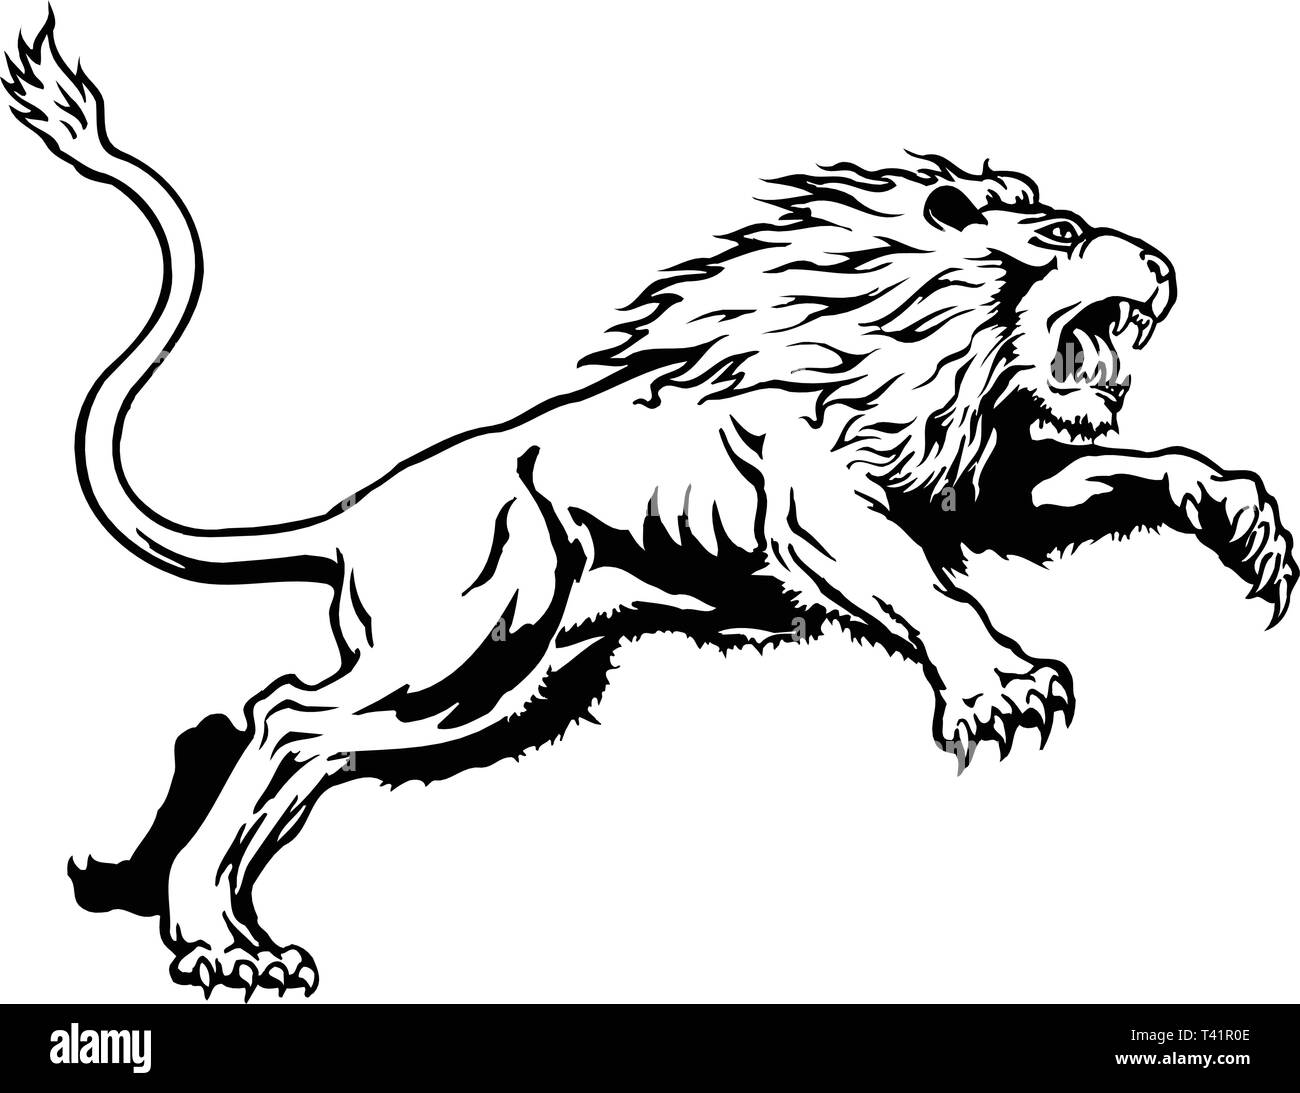 lion leaping vector illustration T41R0E